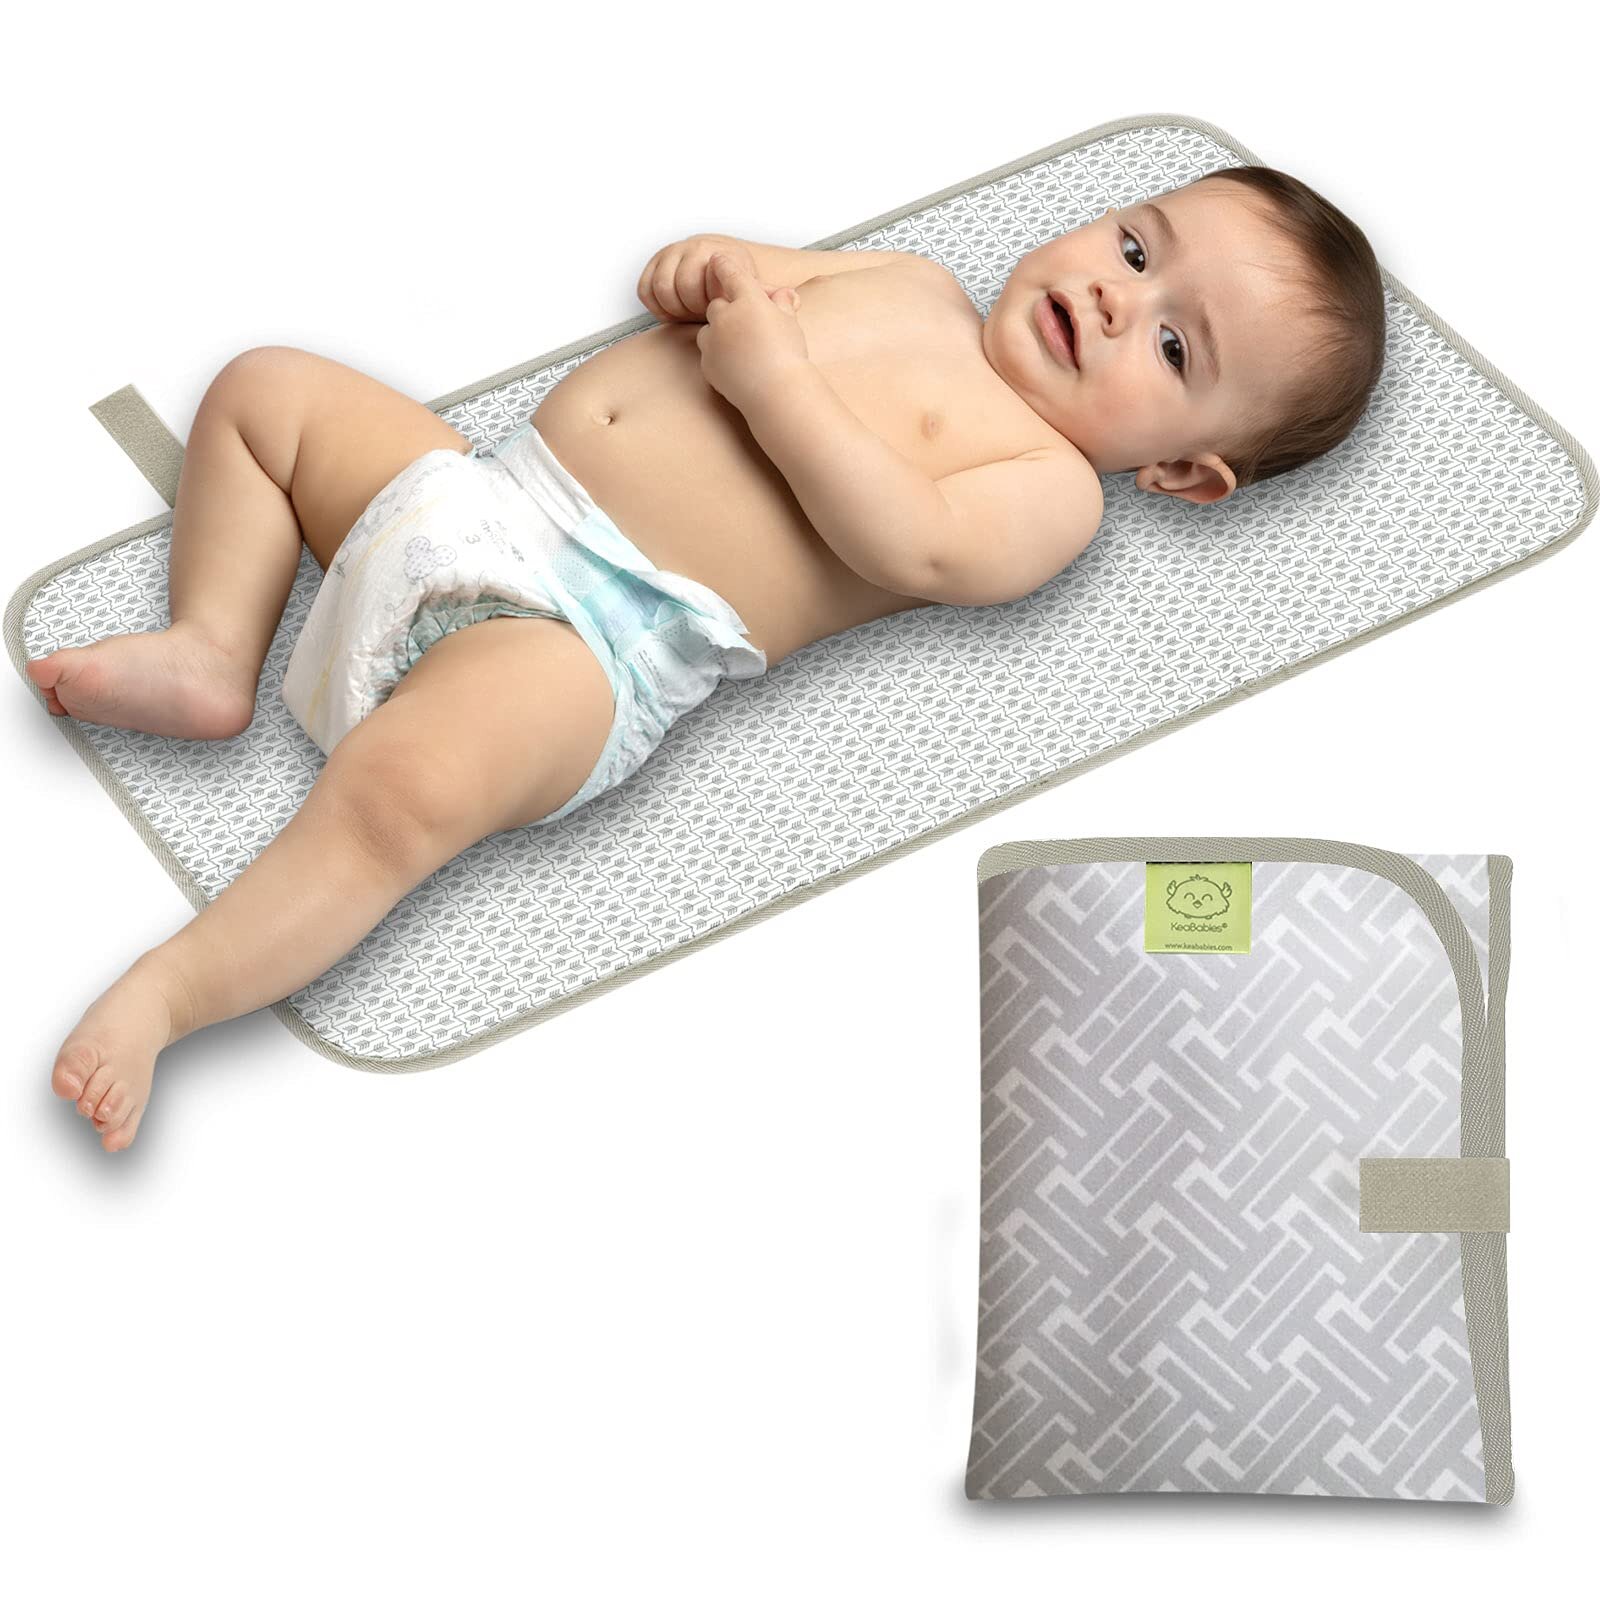 Portable Diaper changing Pad - Waterproof Foldable Baby changing Mat - Travel Diaper change Mat - Lightweight